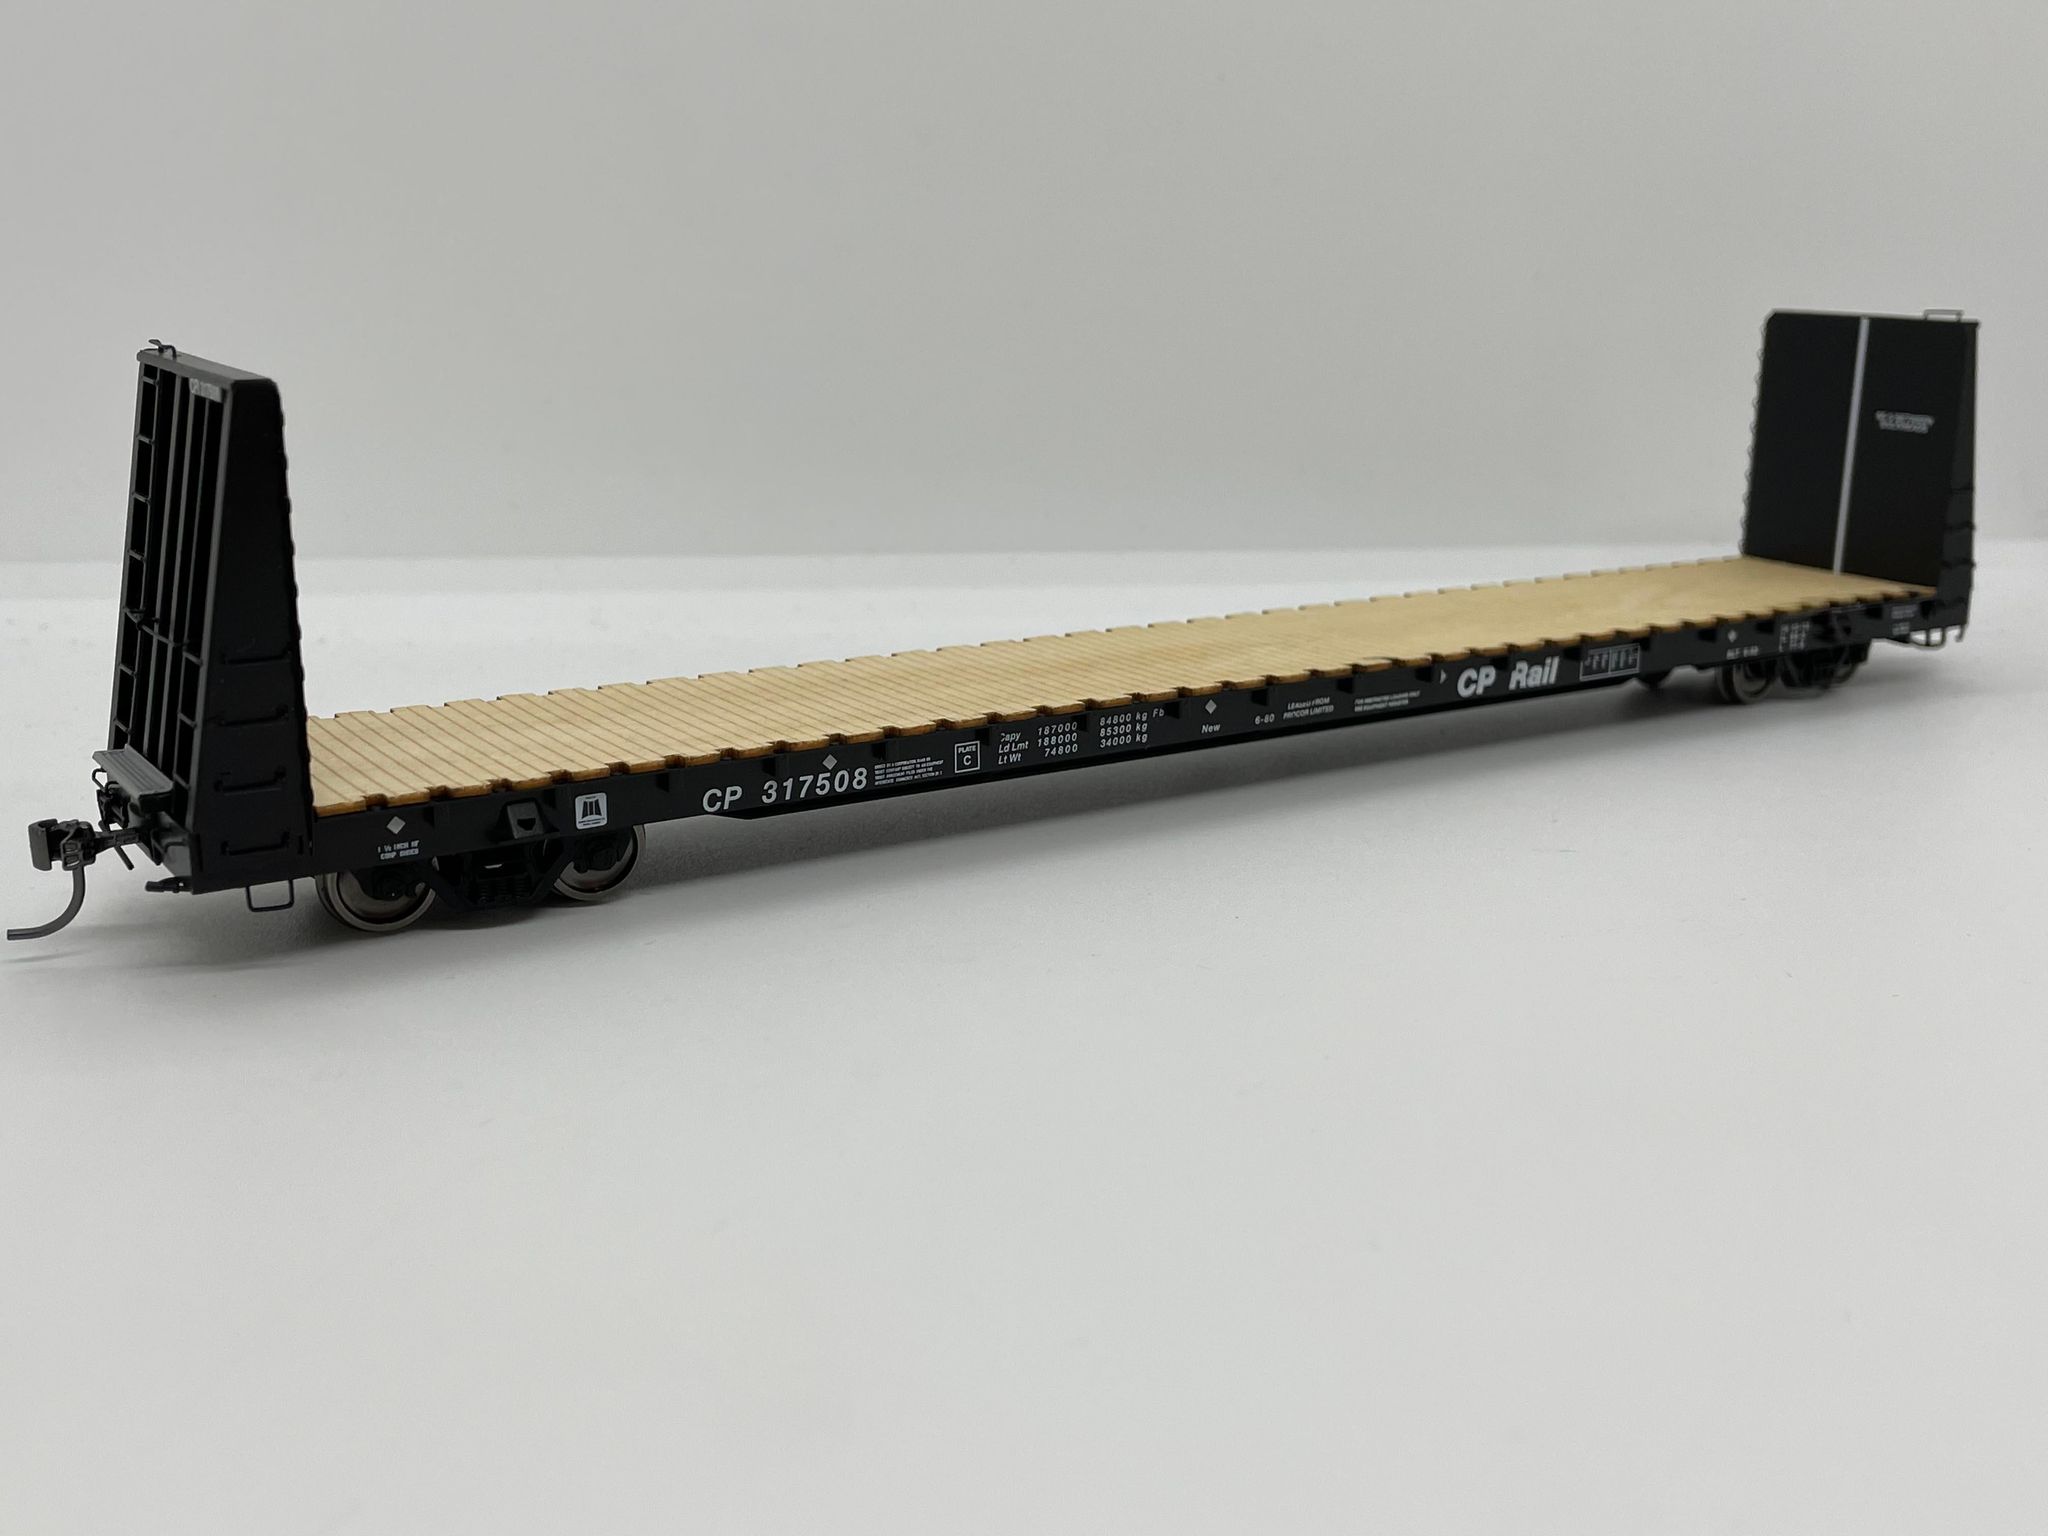 Rapido 147002 - HO 66ft Bulkhead Flatcar - CP Rail (Black) #317422